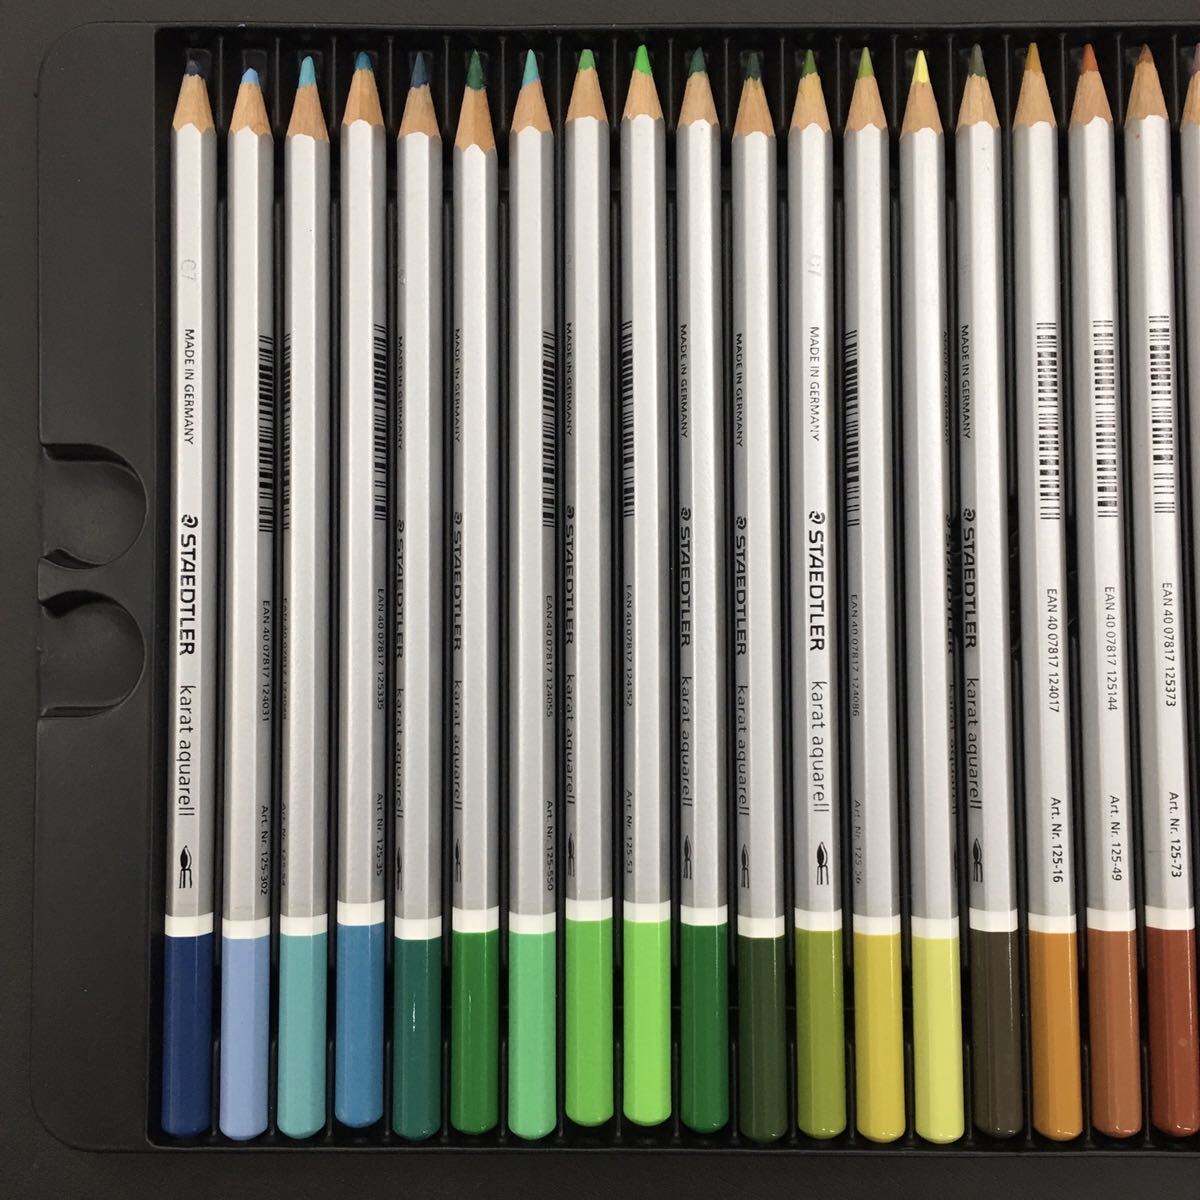 Staedtler カラトアクェレル ステッドラー 水彩色鉛筆 60色セット アート用品 美術 画材